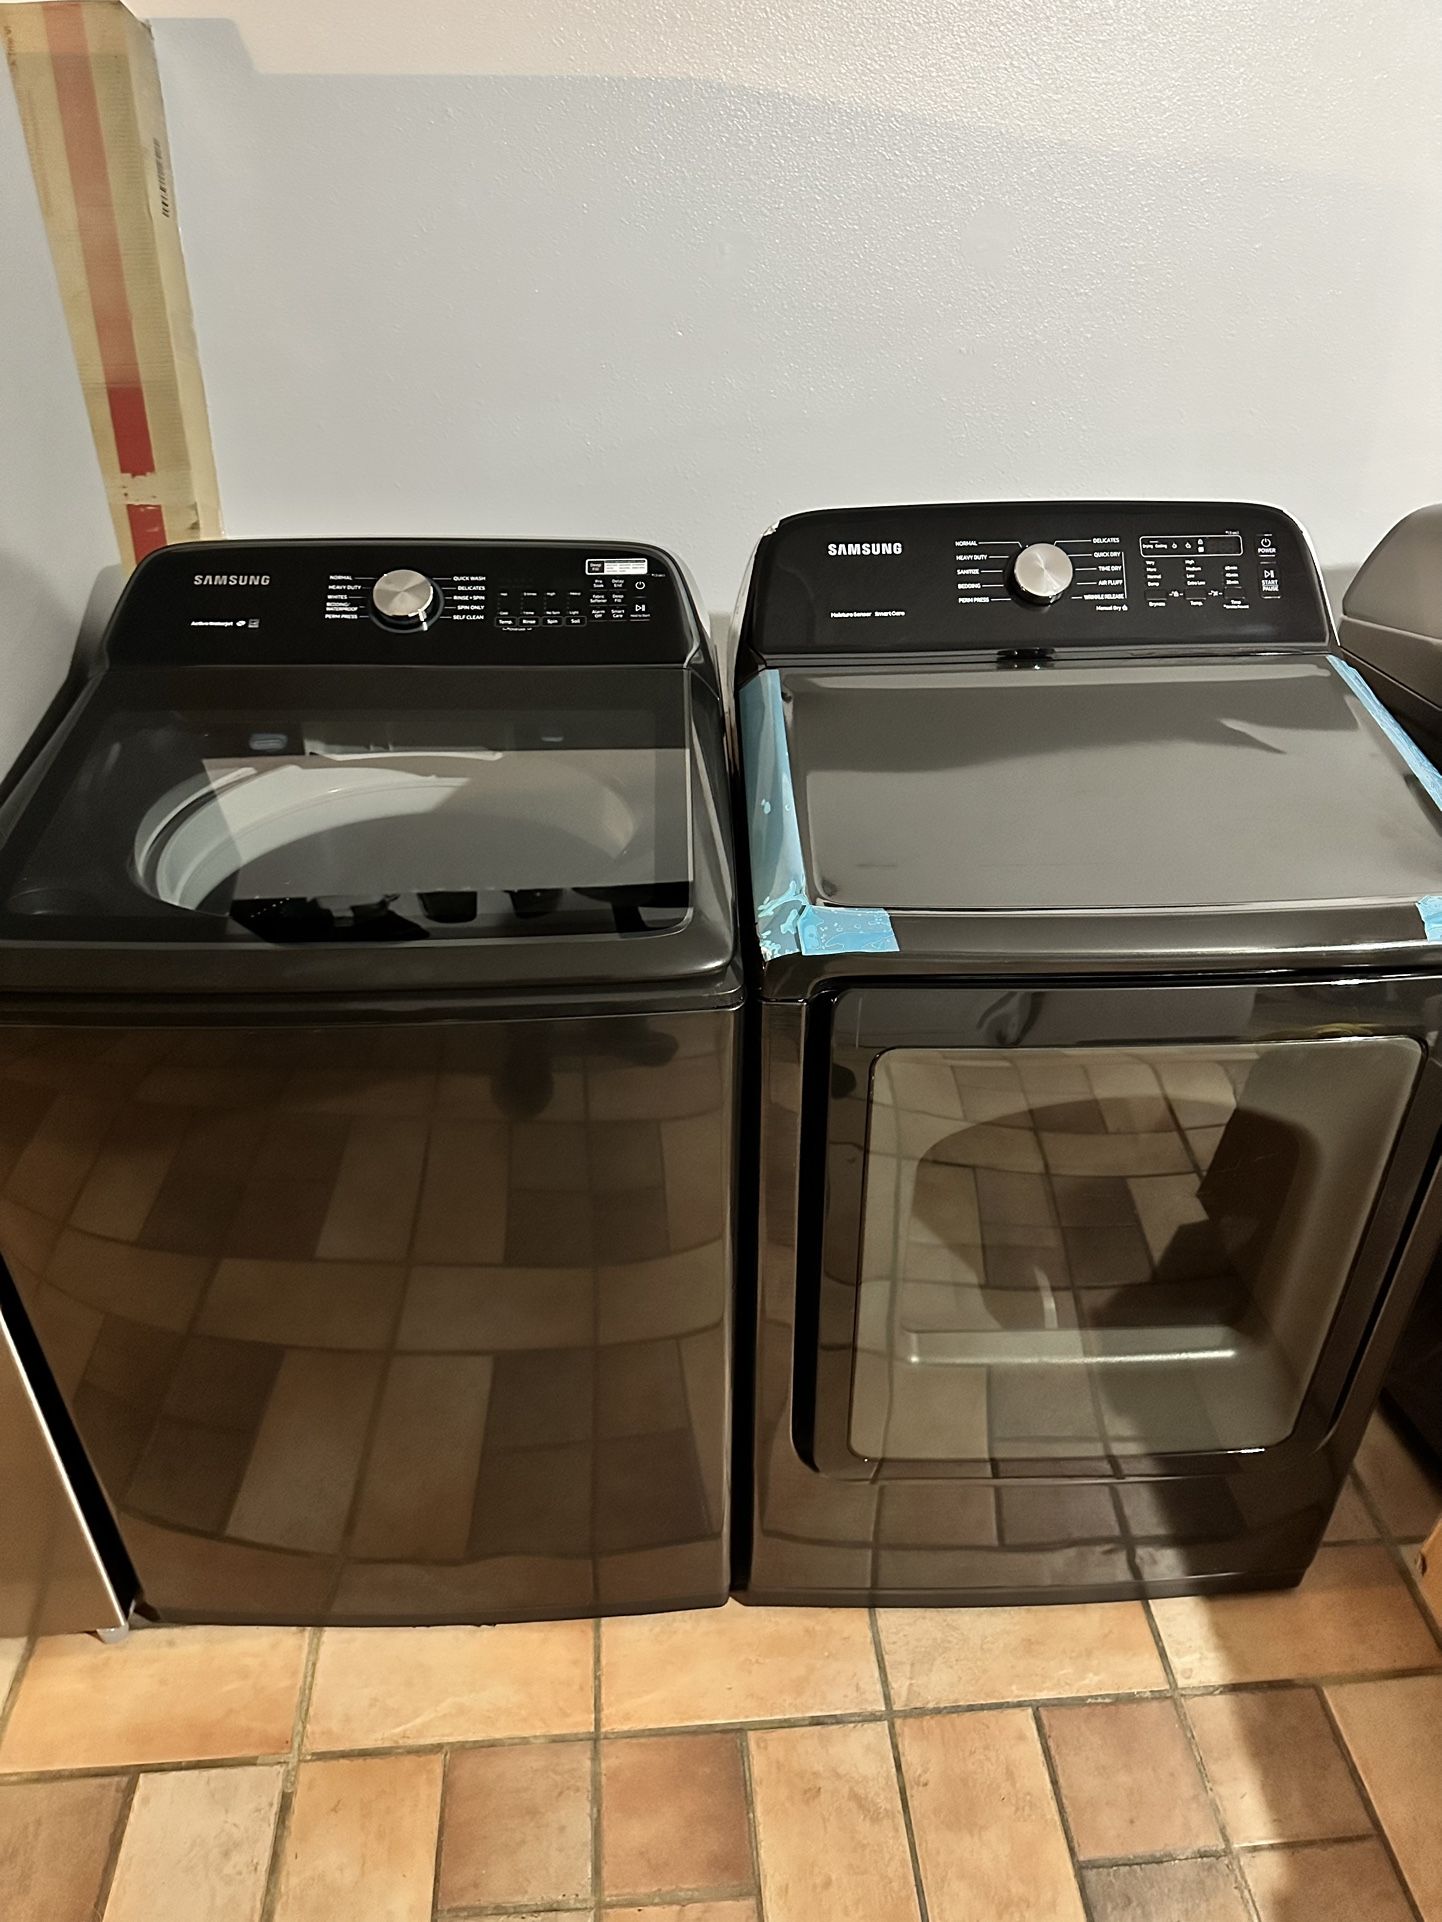 2022 Black Stainless Samsung Washer & Dryer Set (dryer never used) 